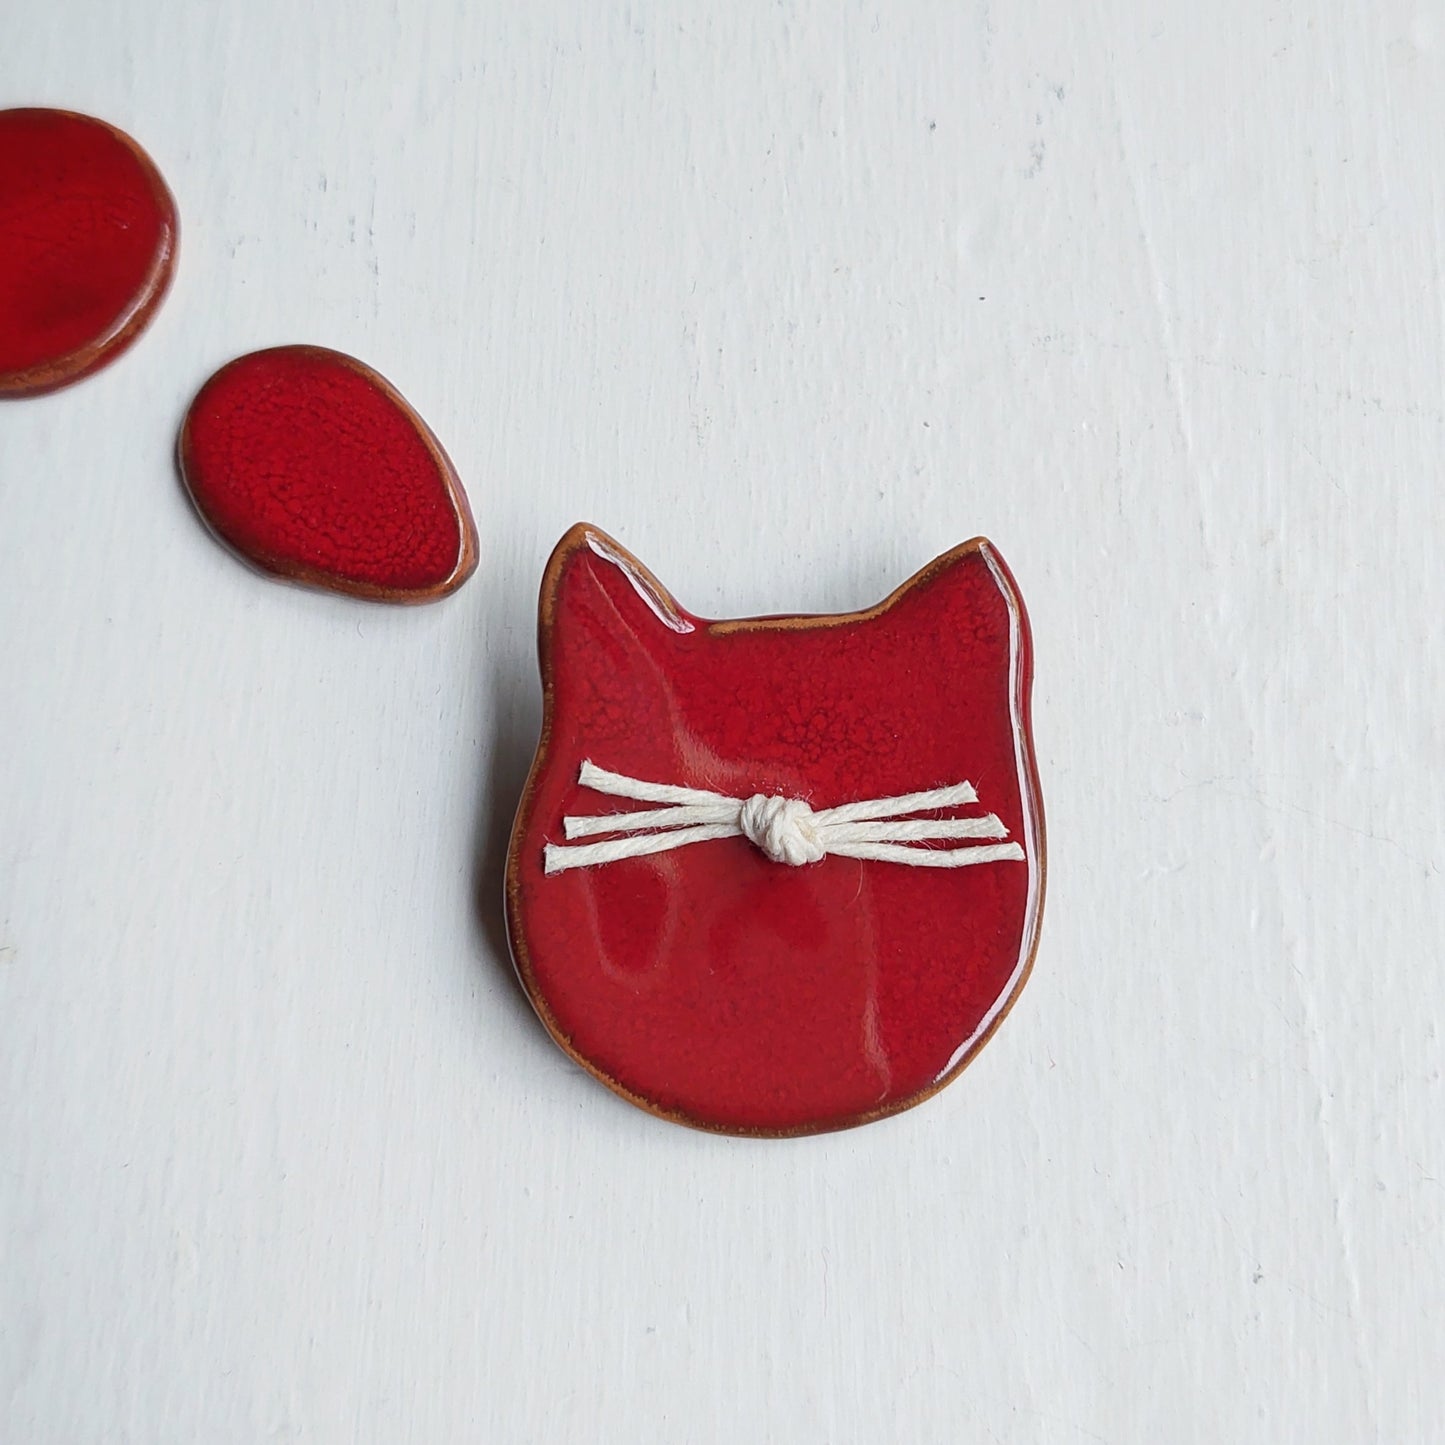 Spille gatti in ceramica rossa, in 3 varianti colore